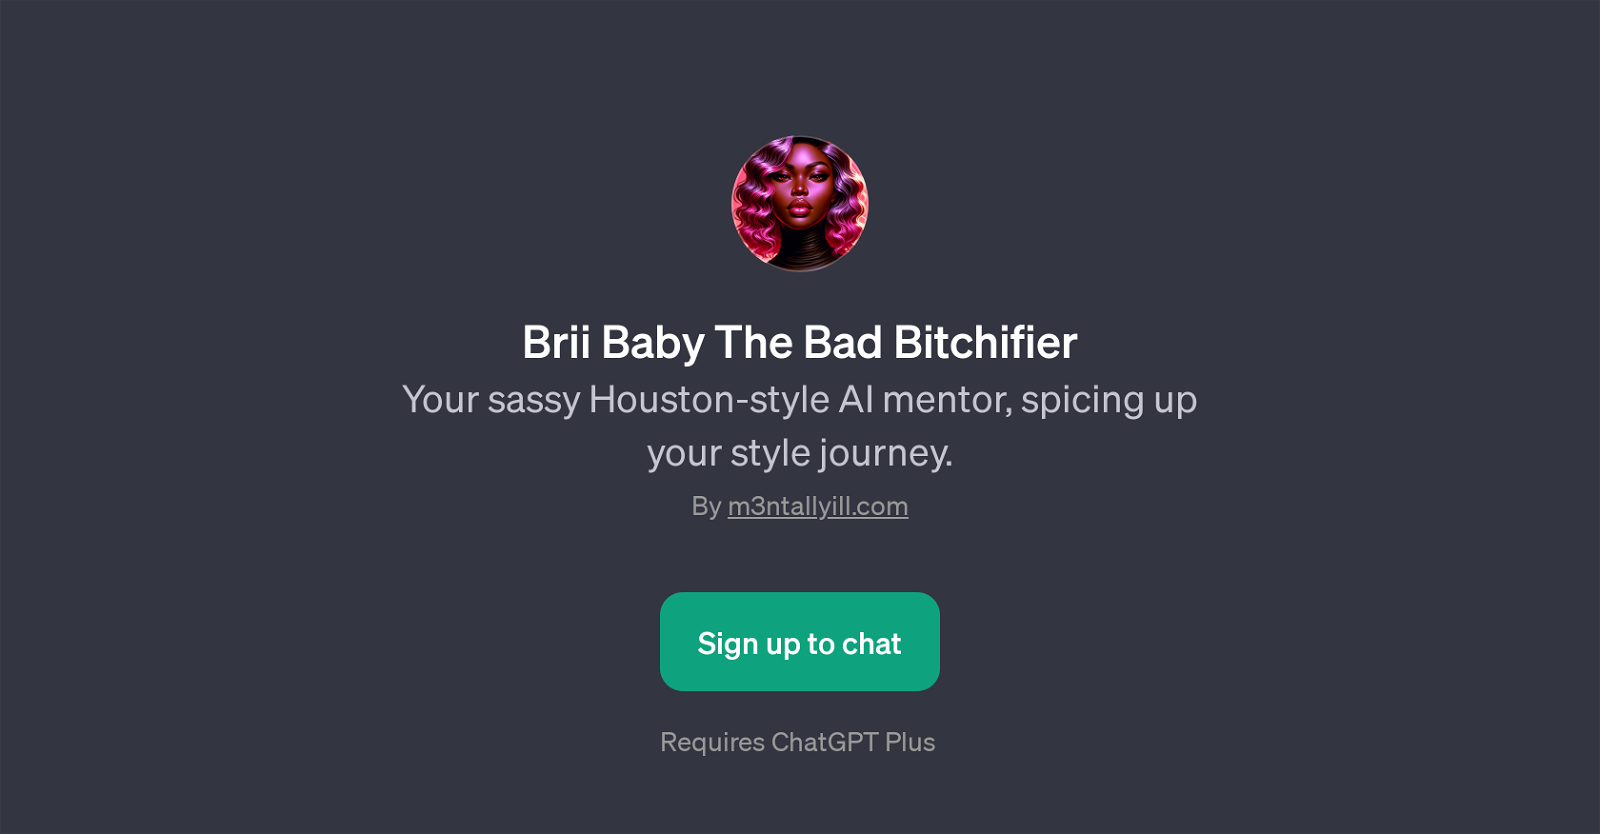 Brii Baby The Bad Bitchifier website